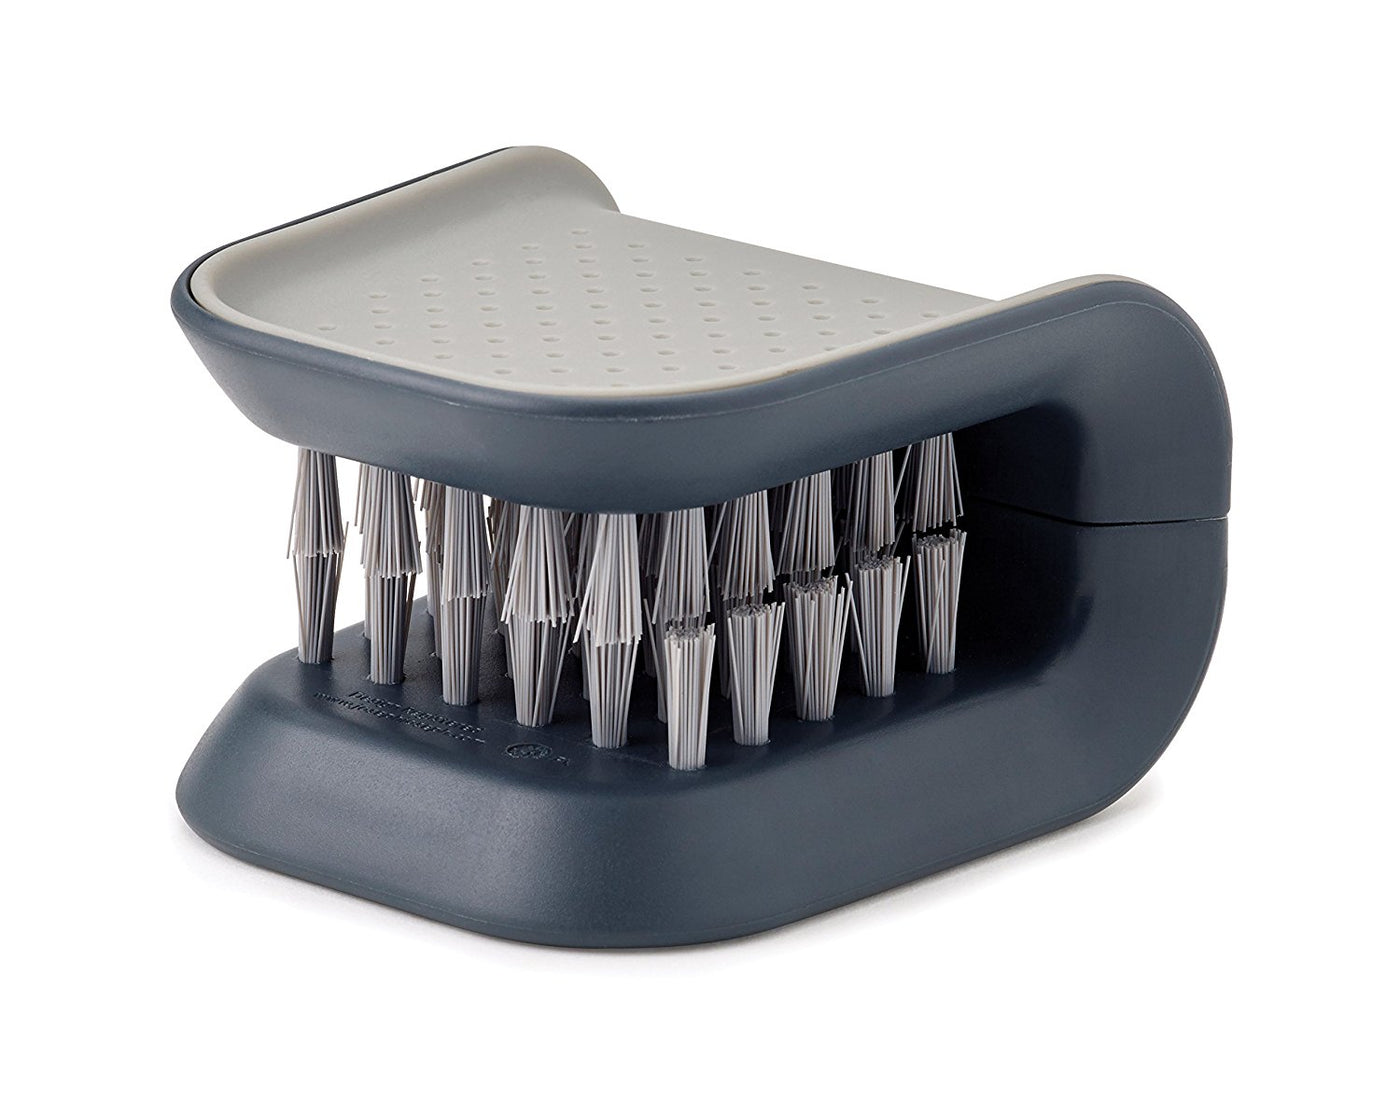 Knife and Cutlery Bristle Brush Scrub Cleaner